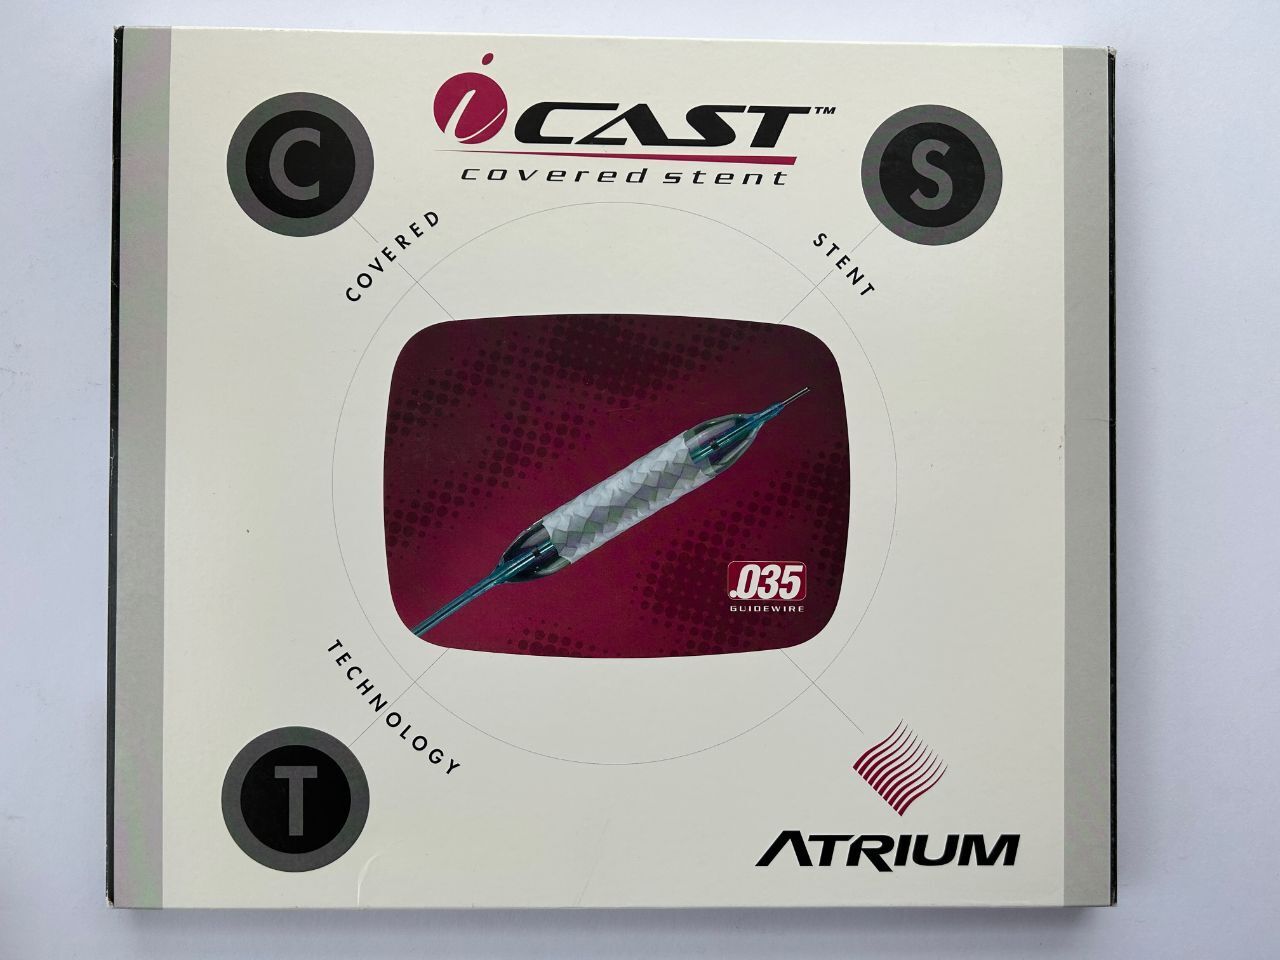 ATRIUM CAST covered stent 7mm x 59mm x 80cm REF: 85405 DATE: 2012/06